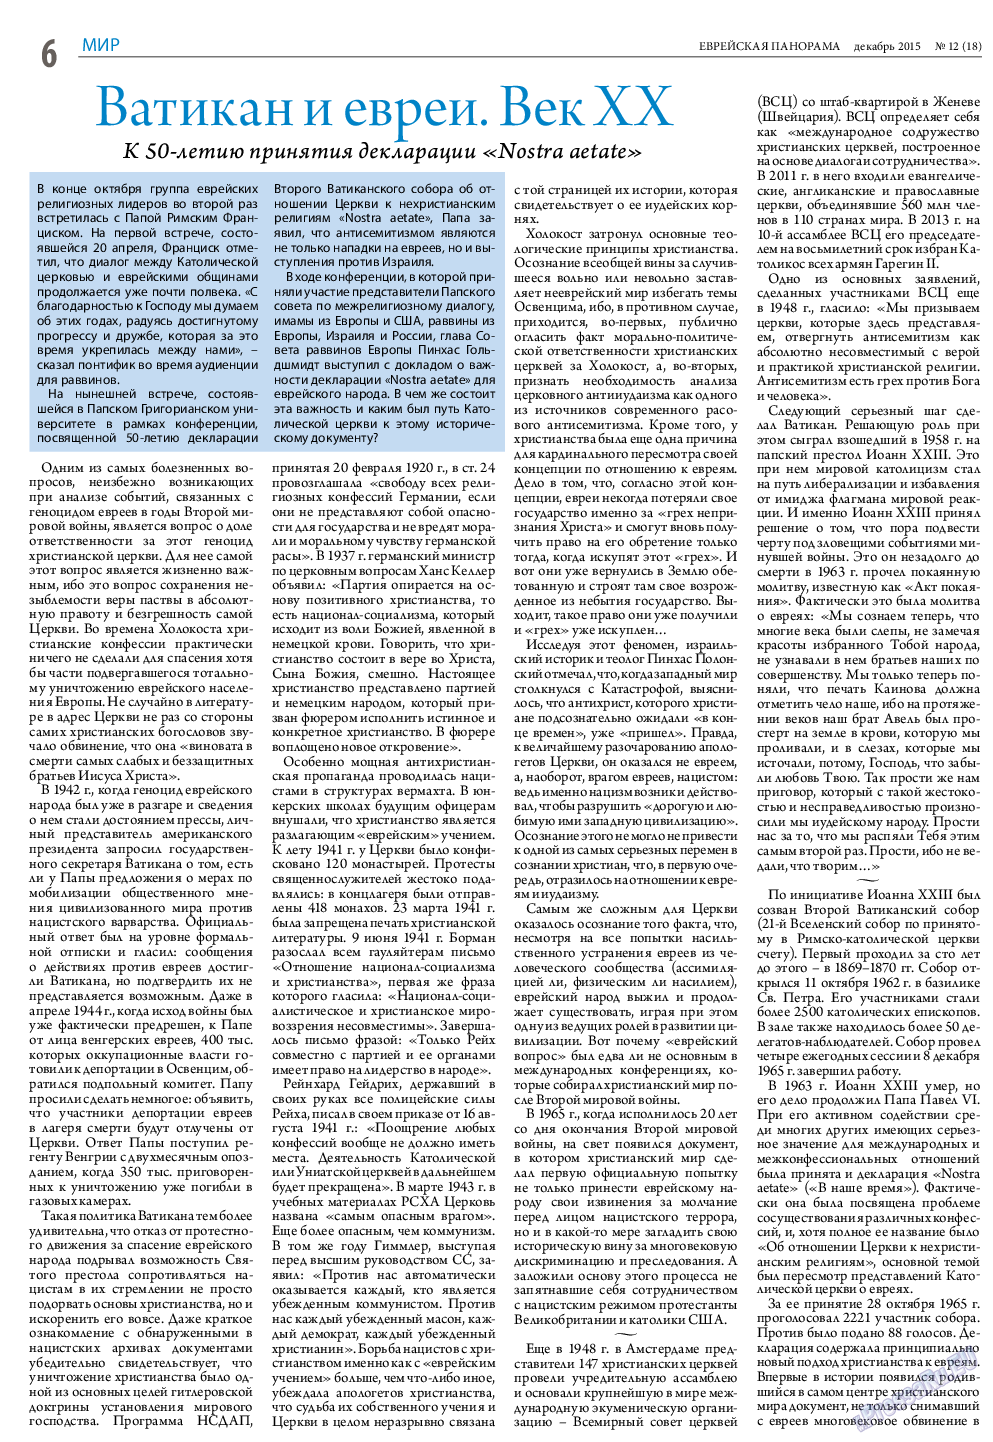 Еврейская панорама, газета. 2015 №12 стр.6